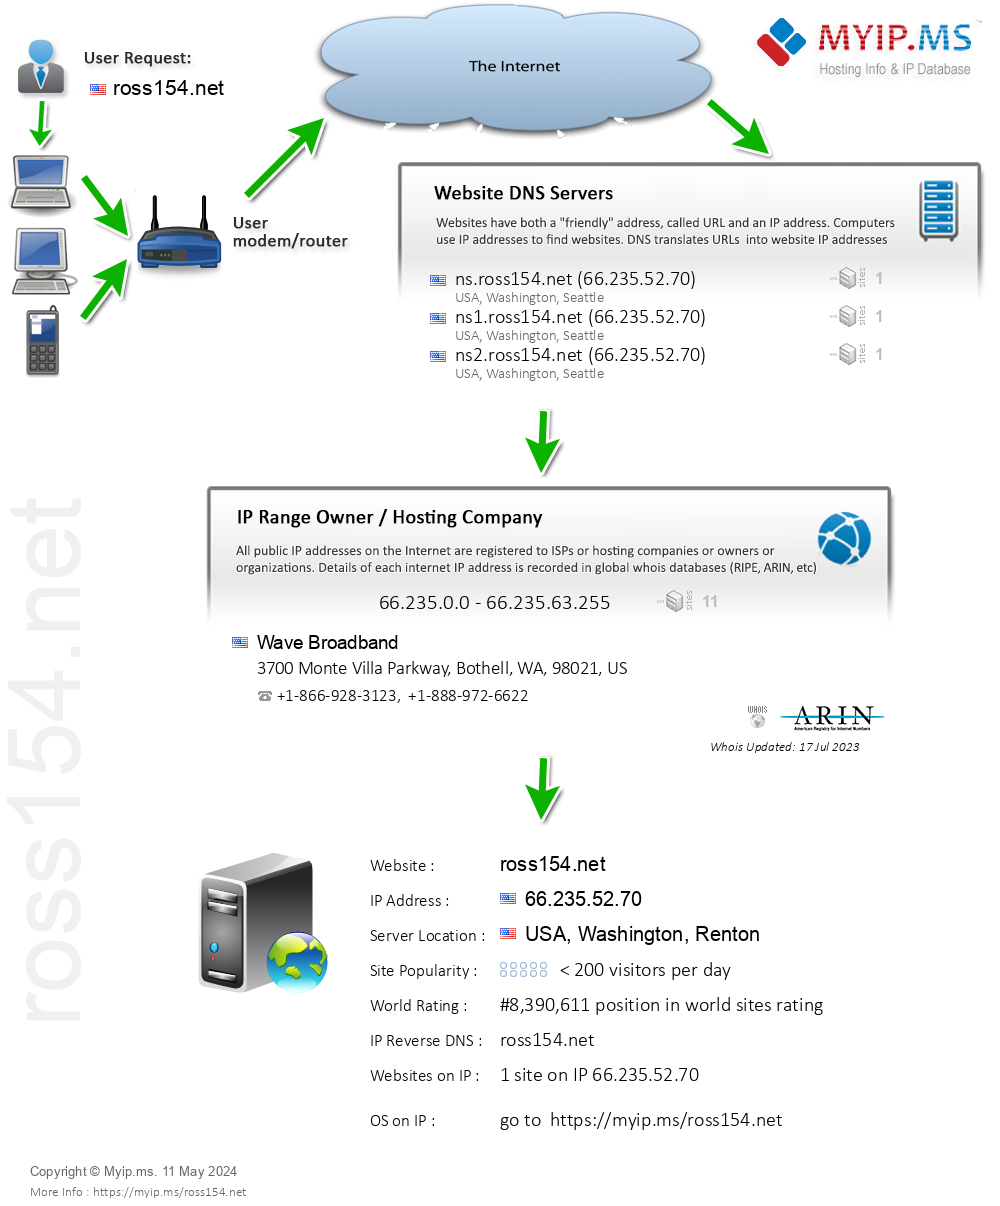 Ross154.net - Website Hosting Visual IP Diagram